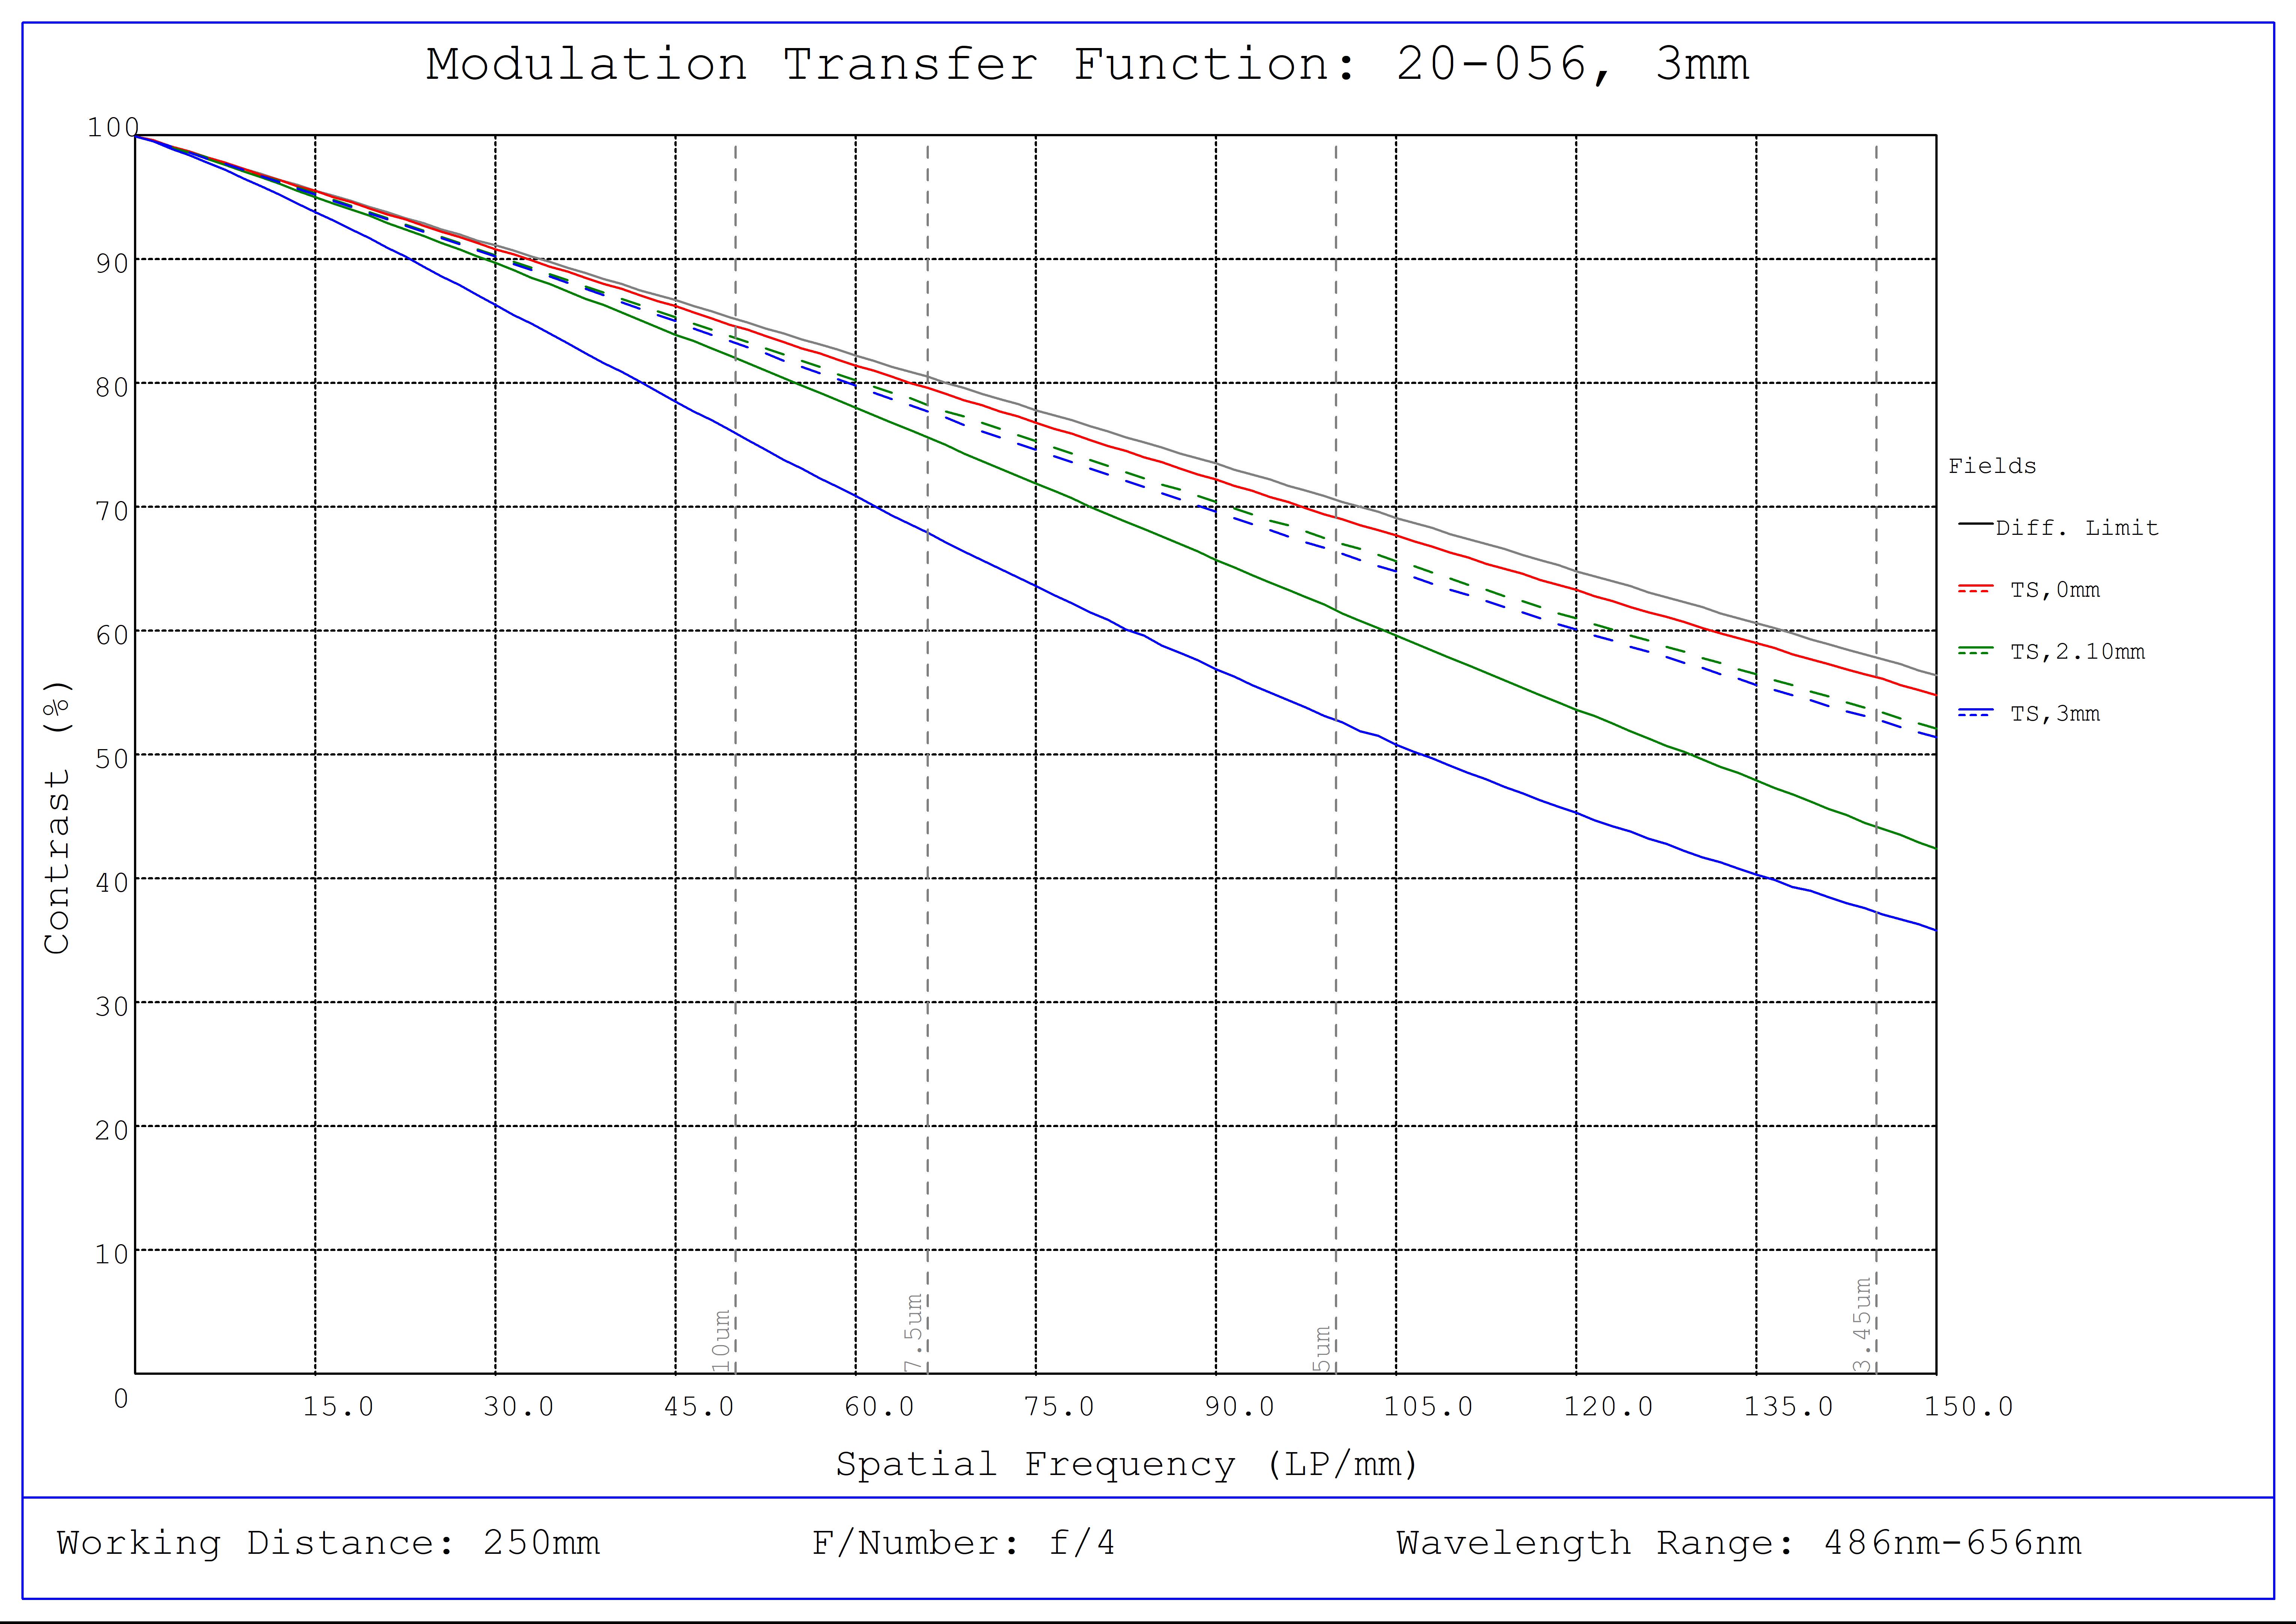 #20-056, 3mm FL f/4.0, IR-Cut Blue Series M12 Lens, Modulated Transfer Function (MTF) Plot, 250mm Working Distance, f4